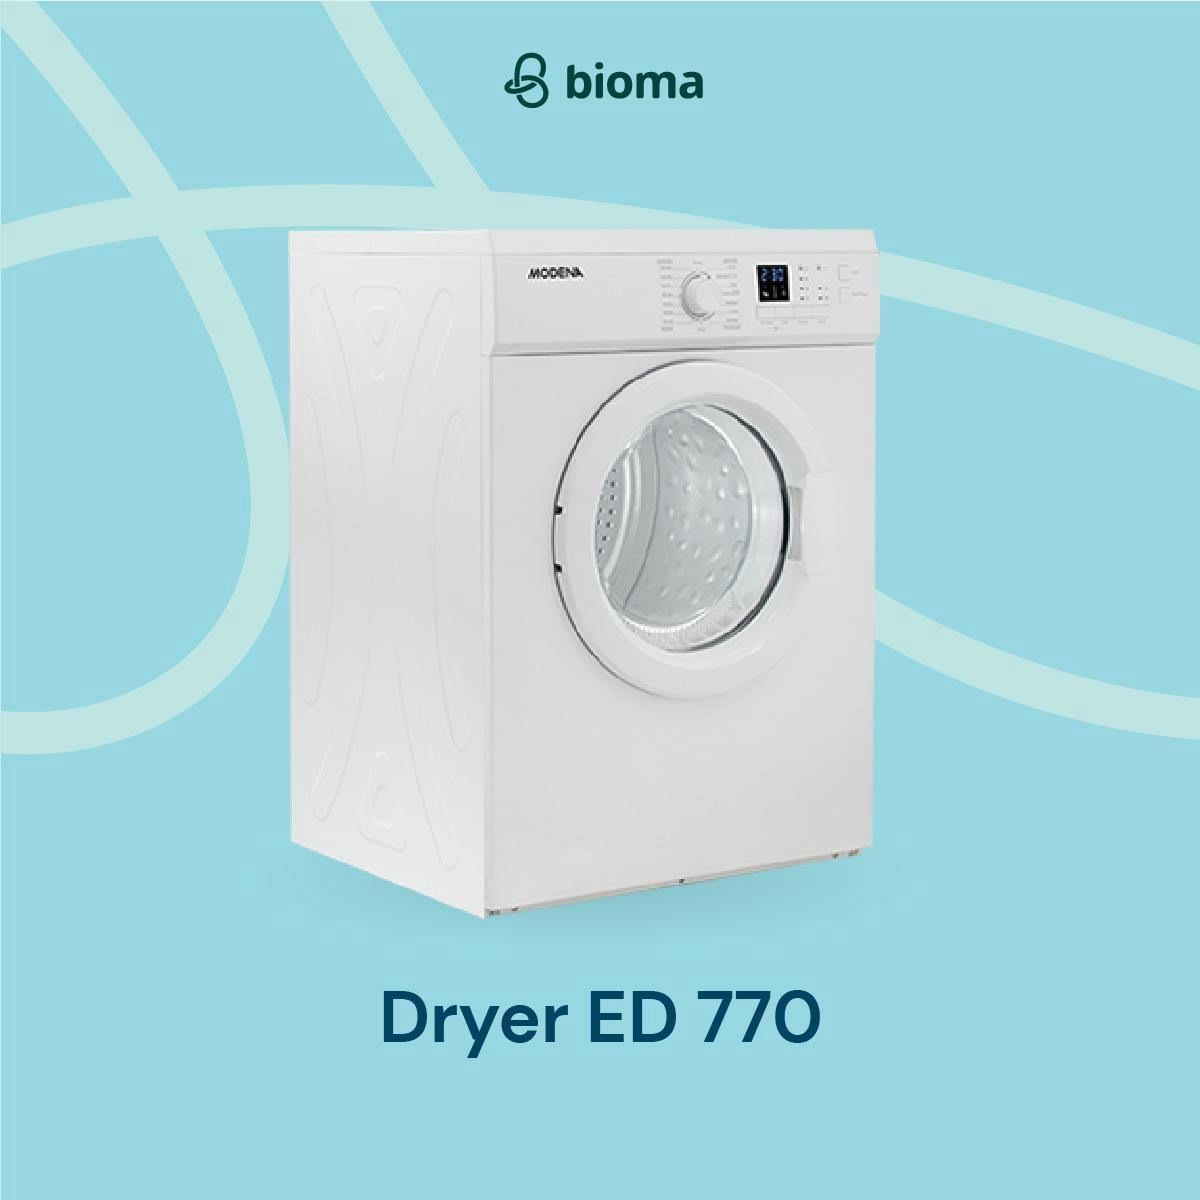 Image 315 Dryer ED 770